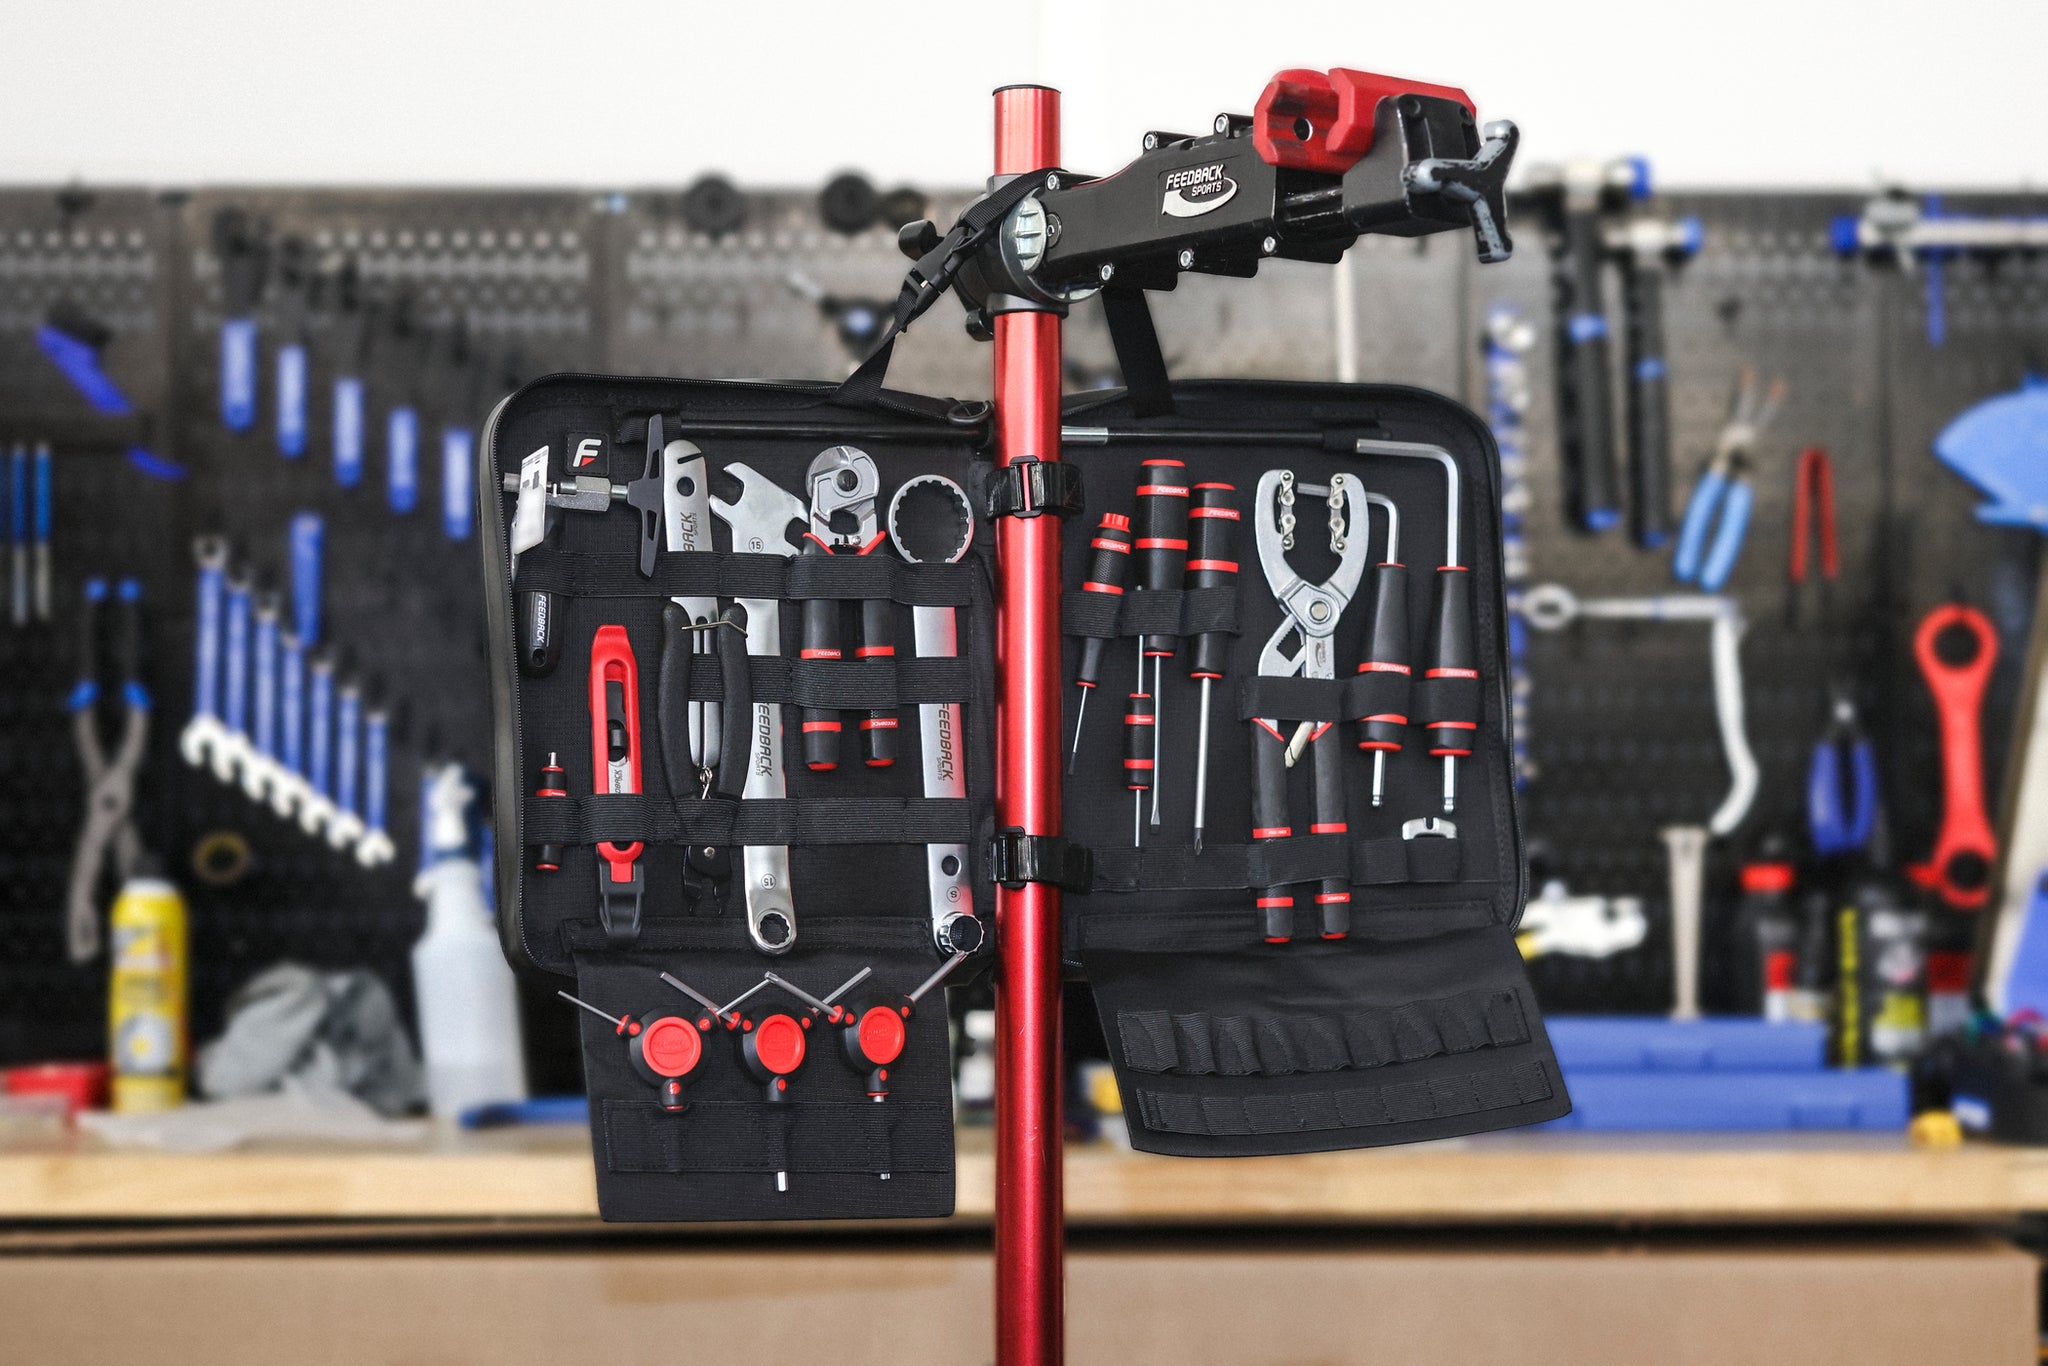 Feedback bike stand and tool kit